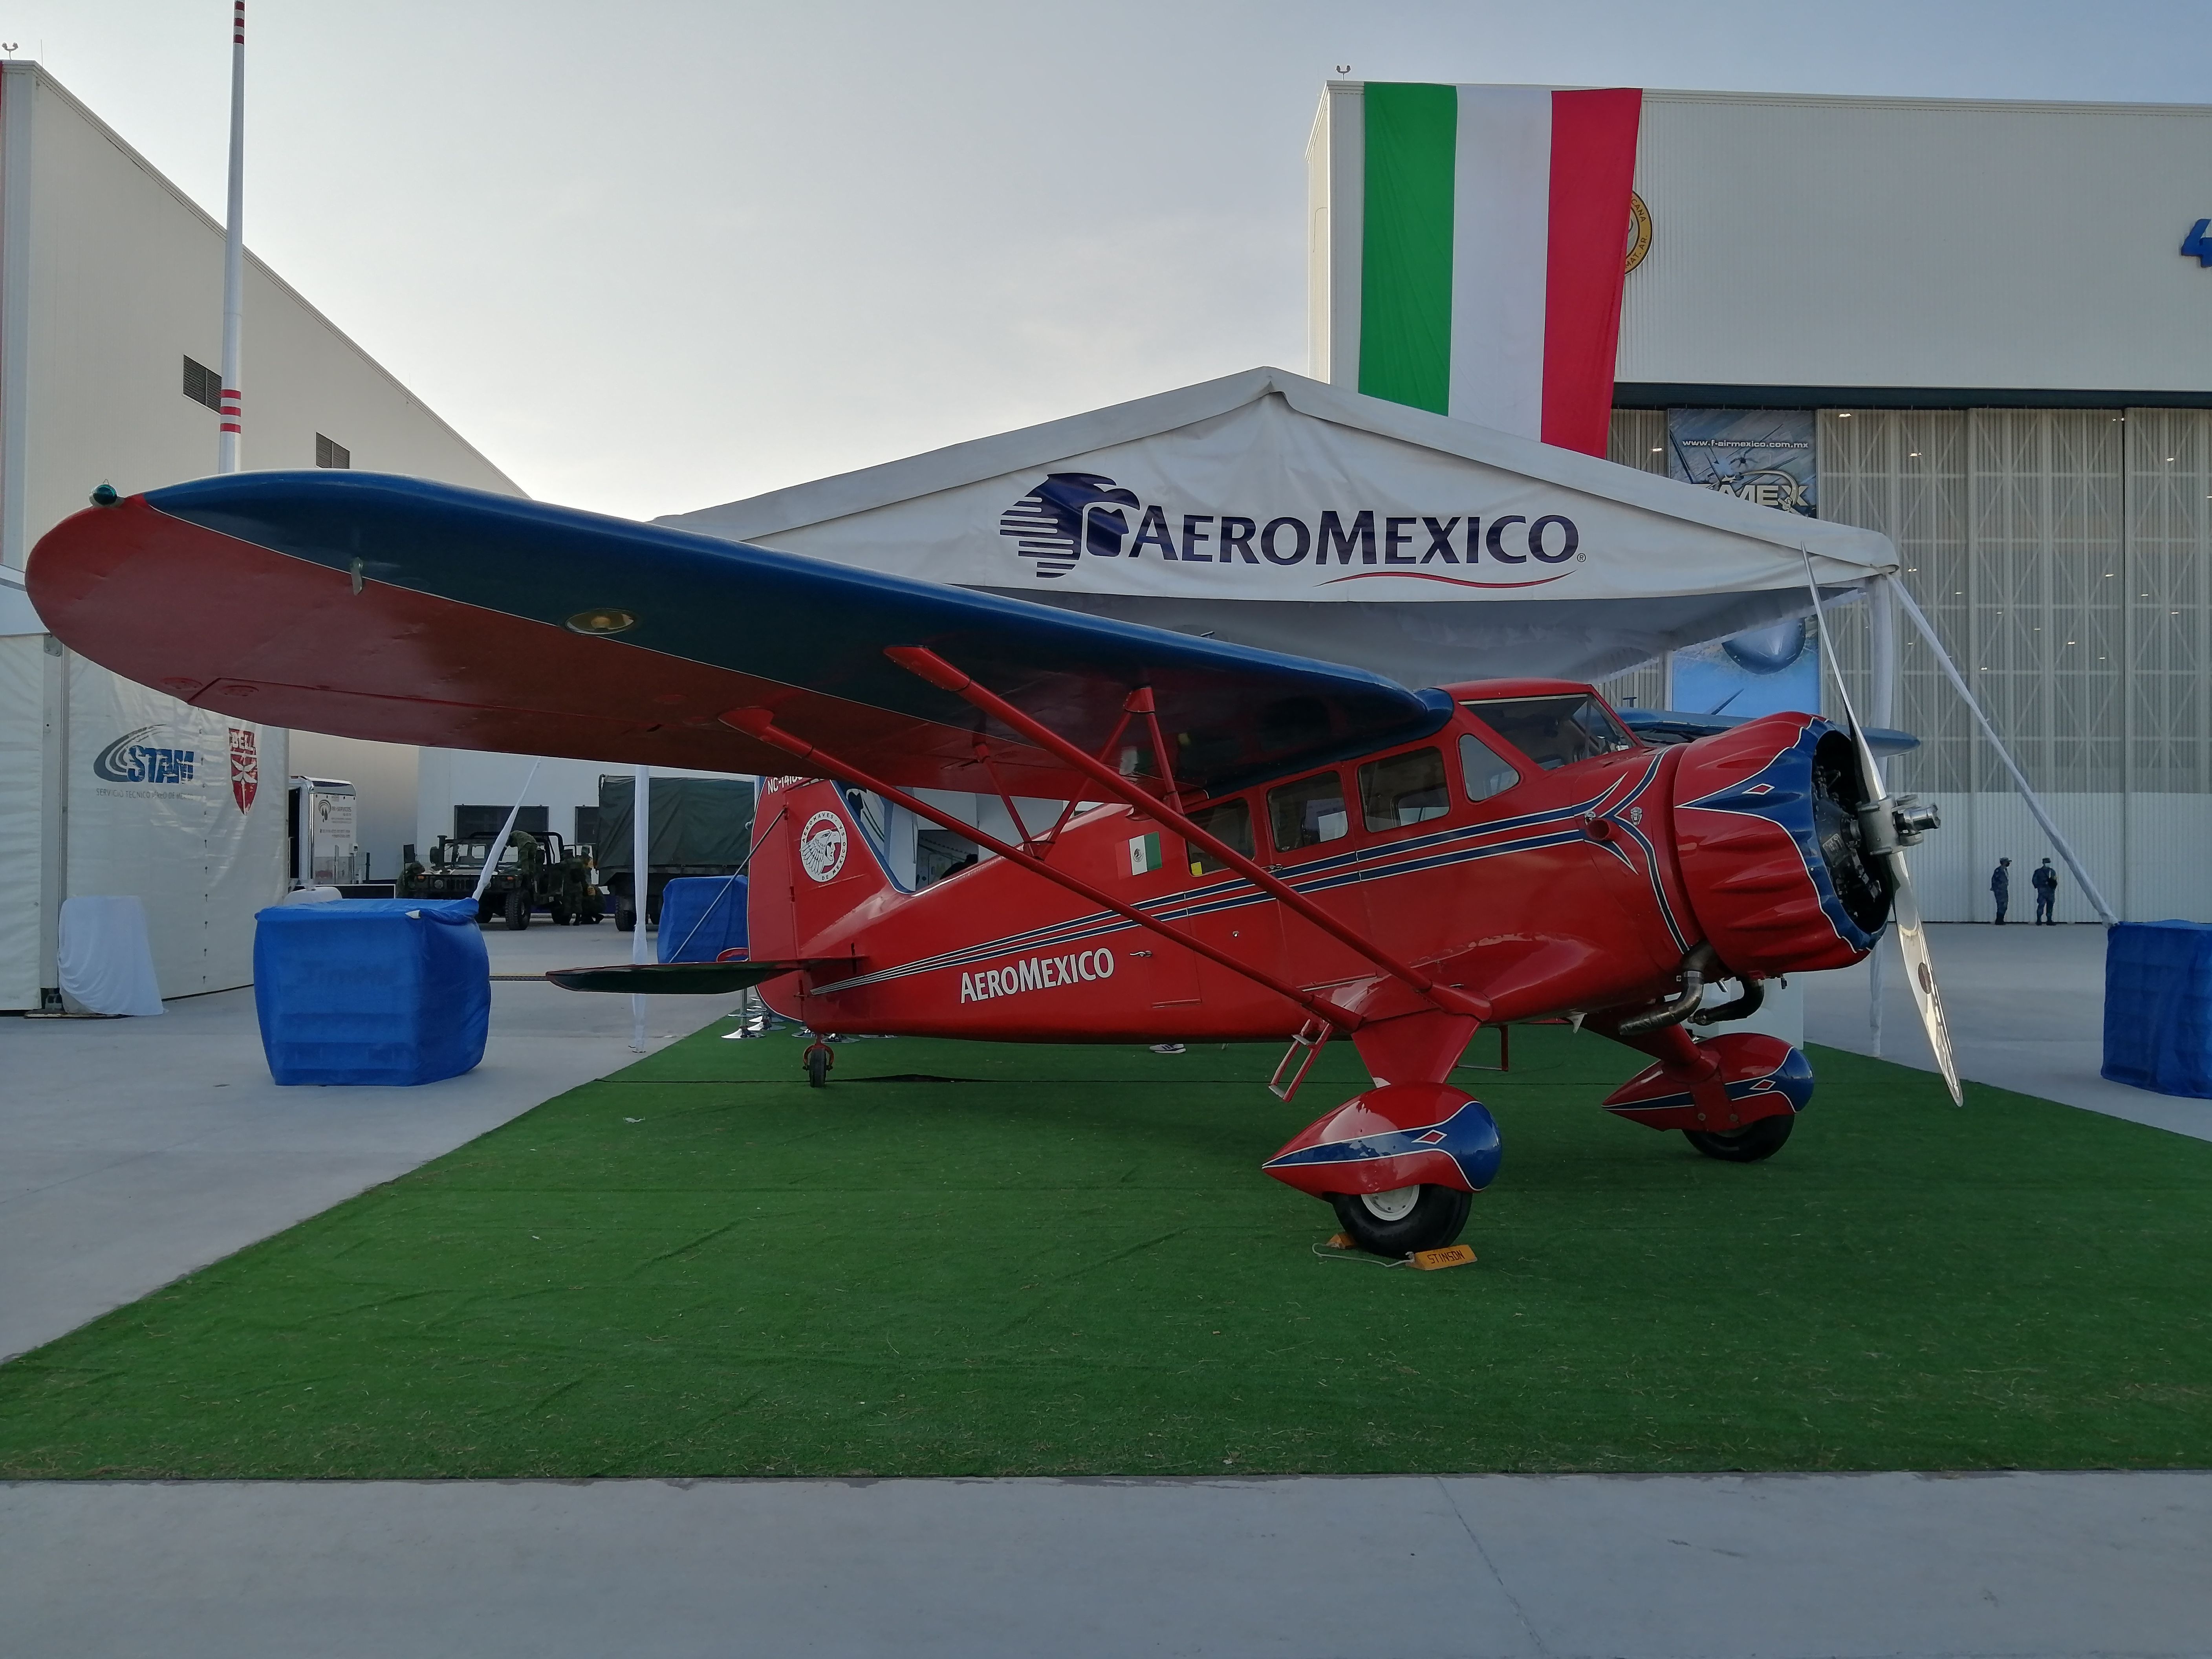 An Aeromexico Stinson SR aircraft restored on display. 